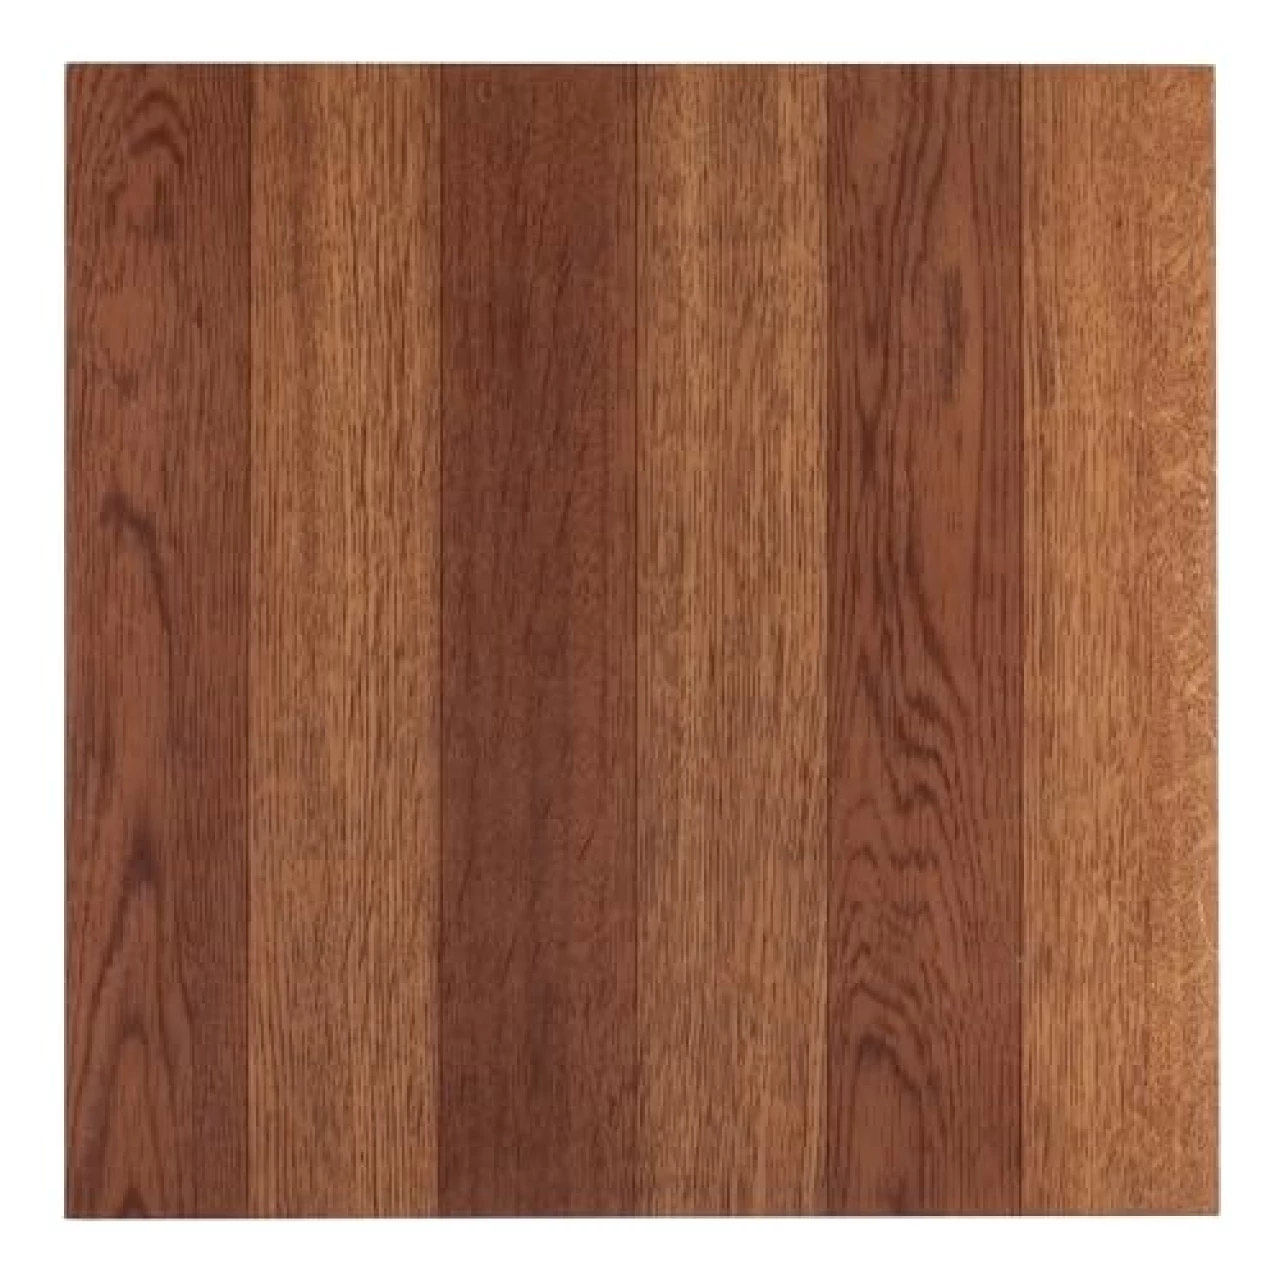 Tivoli Self Adhesive Vinyl Floor Tiles, 45 Tiles - 12&quot; x 12&quot;, Medium Oak Plank-Look - Peel &amp; Stick, DIY Flooring for Kitchen, Dining Room, Bedrooms, Basements &amp; Bathrooms by Achim Home Decor